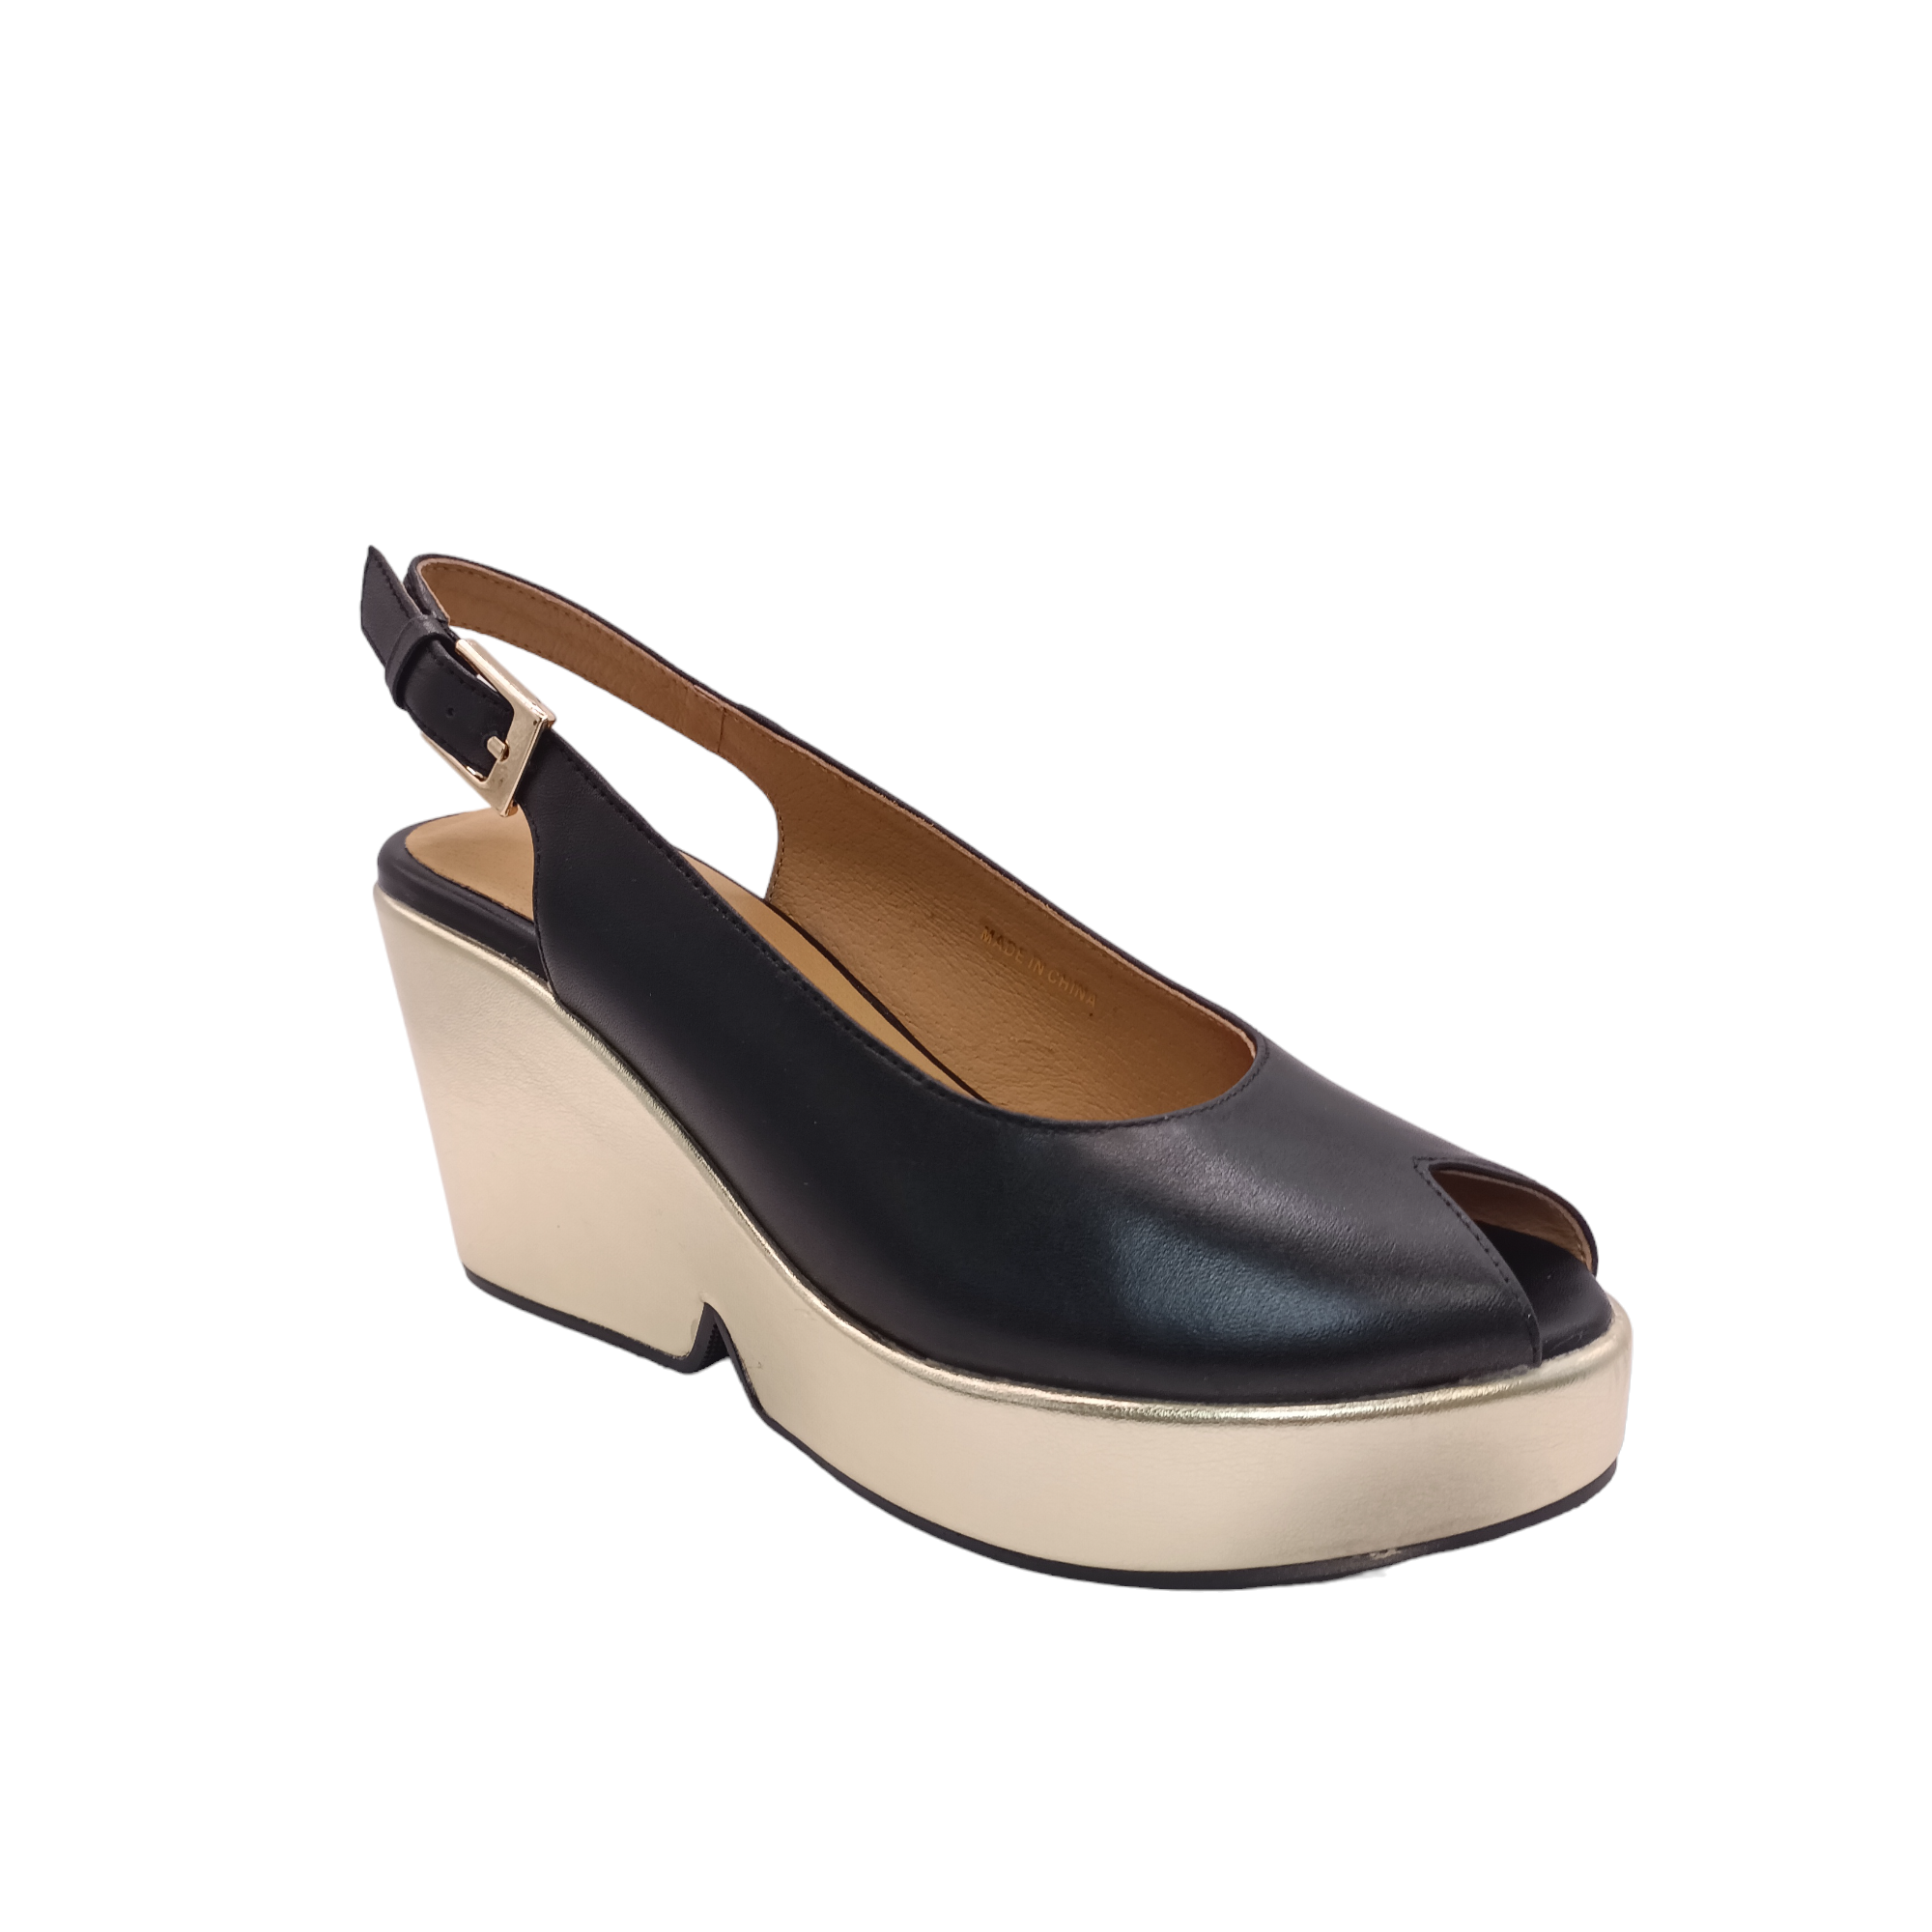 Believer - shoe&me - Tamara - Wedges - Platform, Sandals, Summer, Wedges, Womens